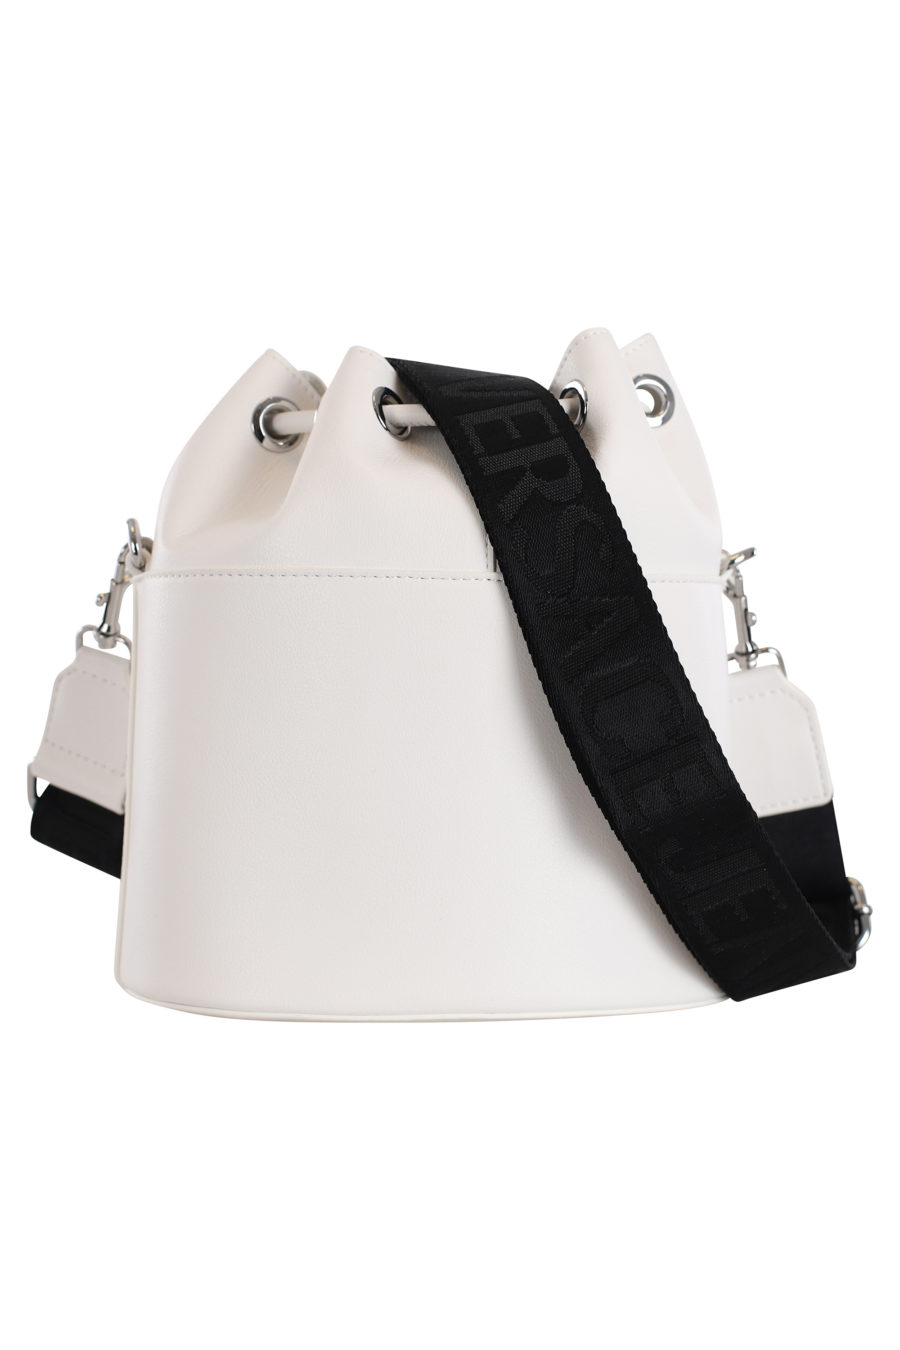 Bolso bandolera blanco estilo saco con logo negro - IMG 0207